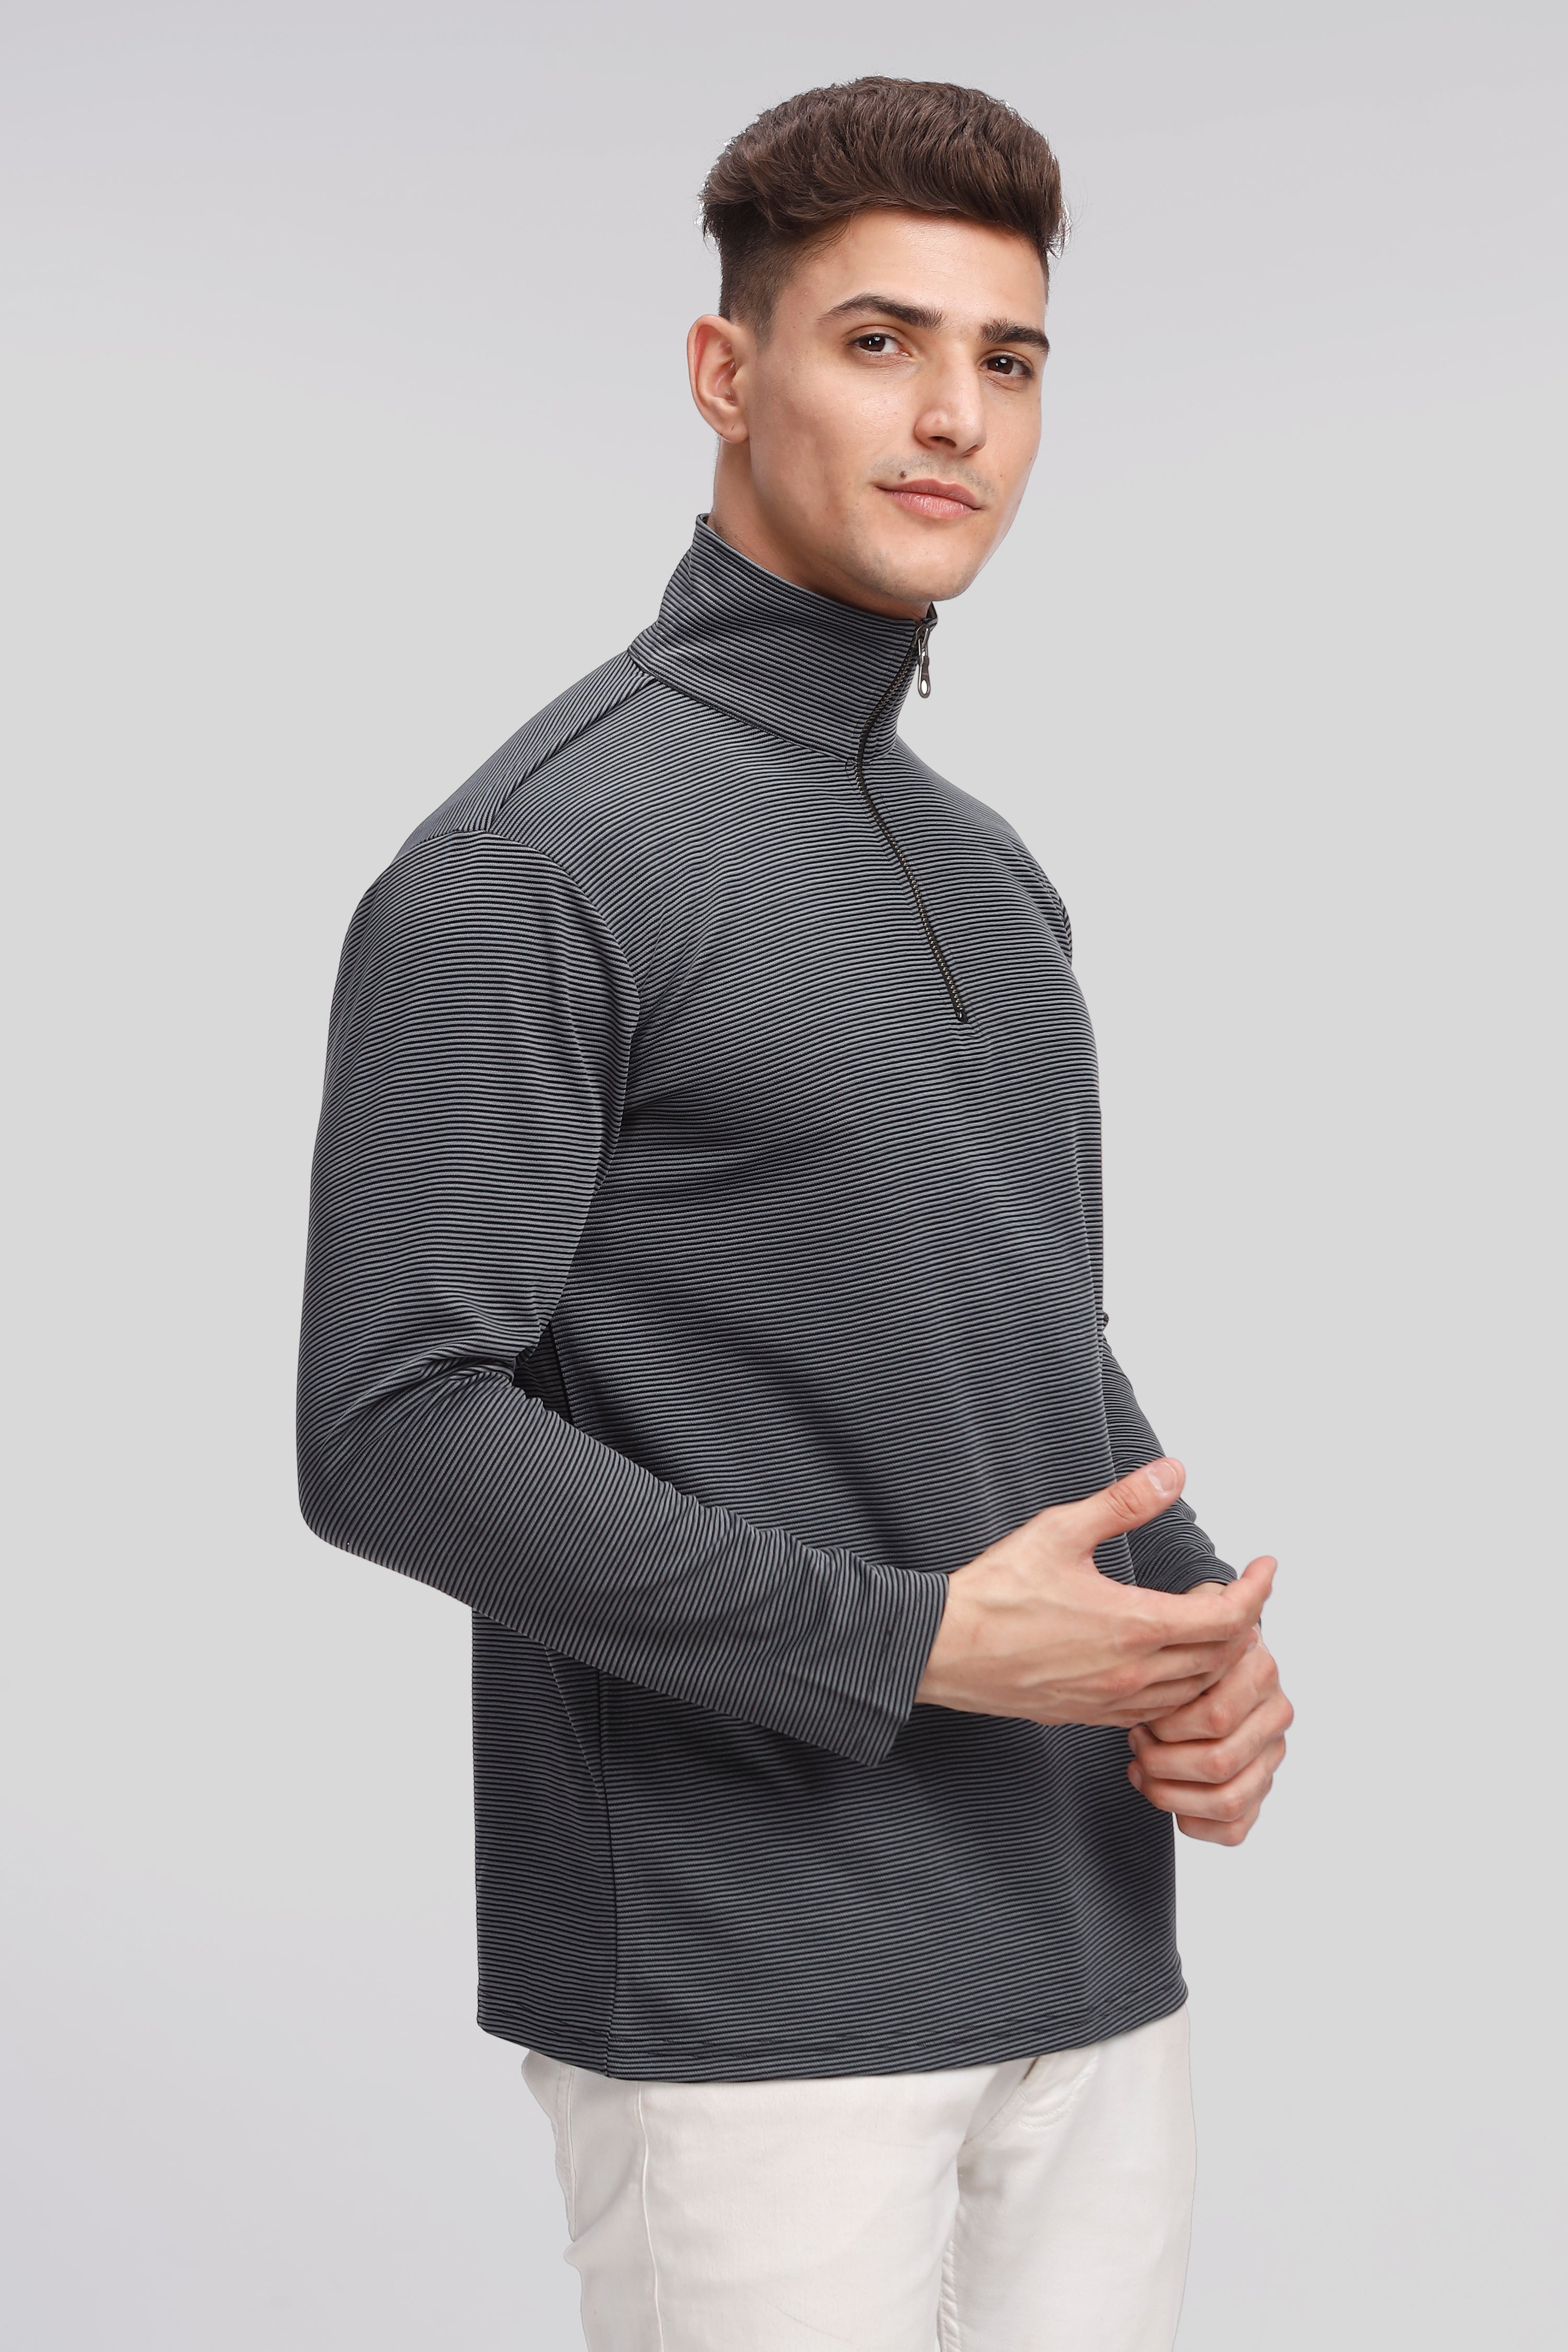 Grey Stripes Self Design Zipper T-Shirt